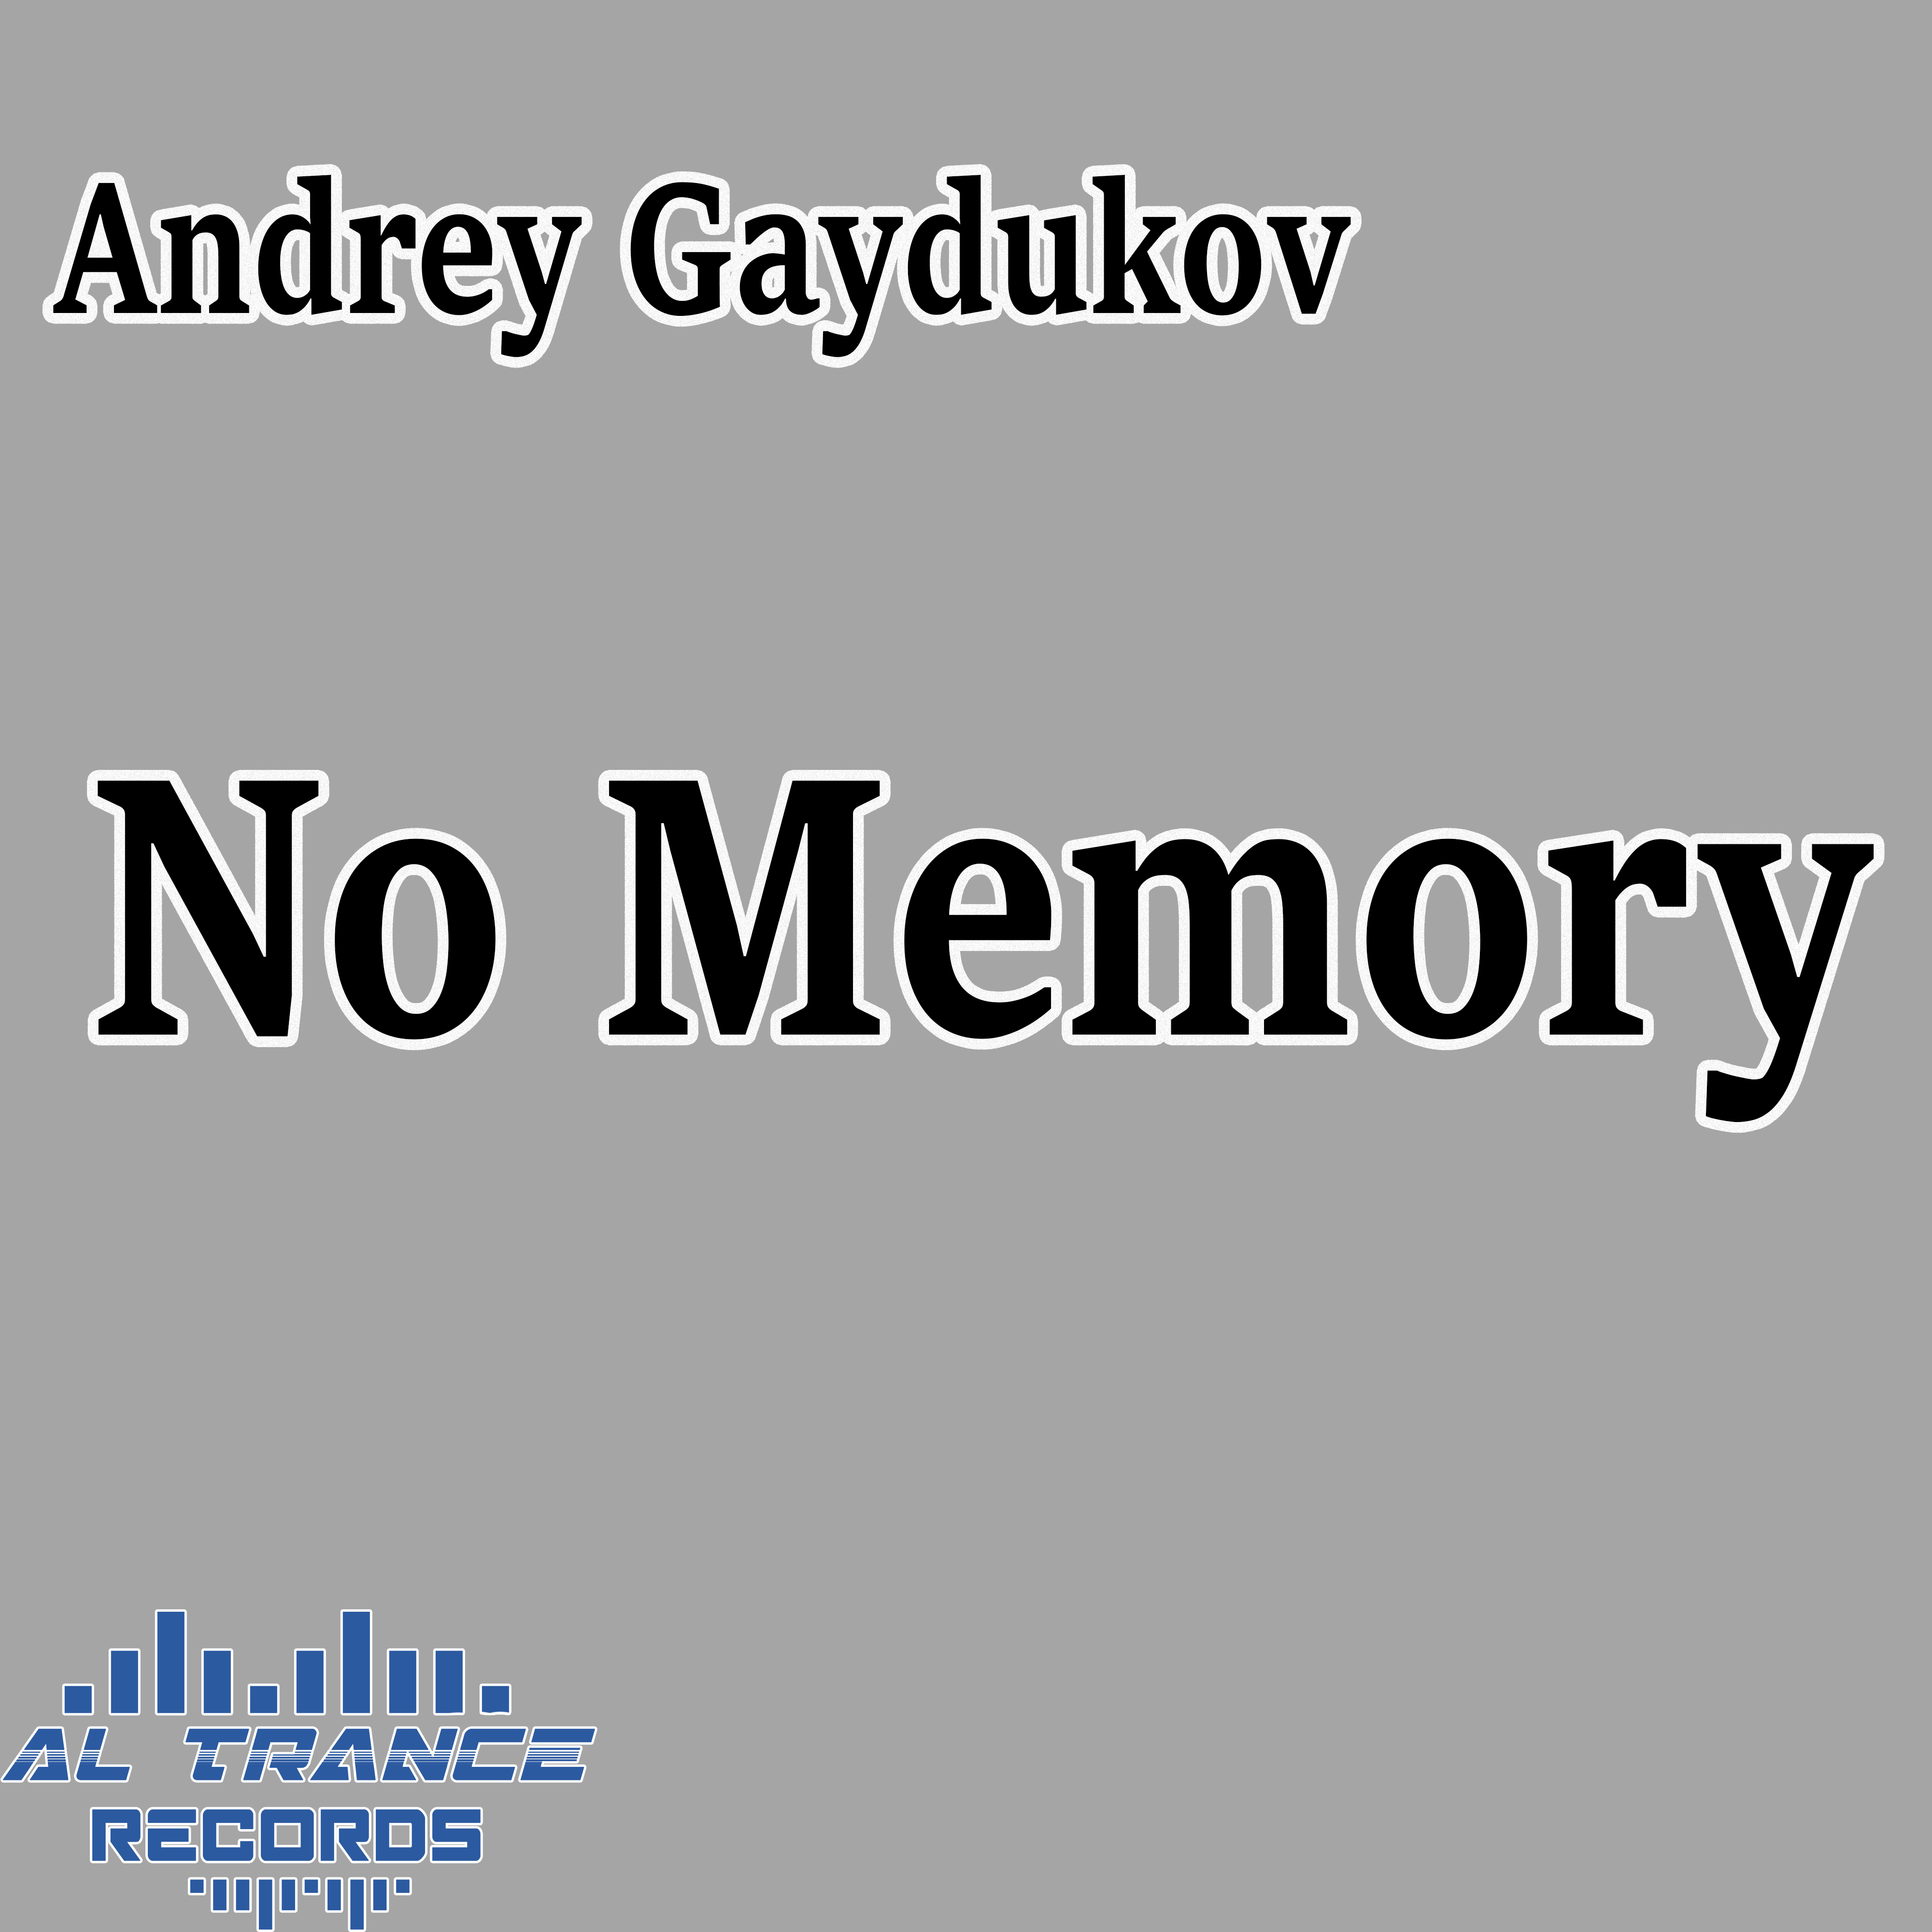 No Memory